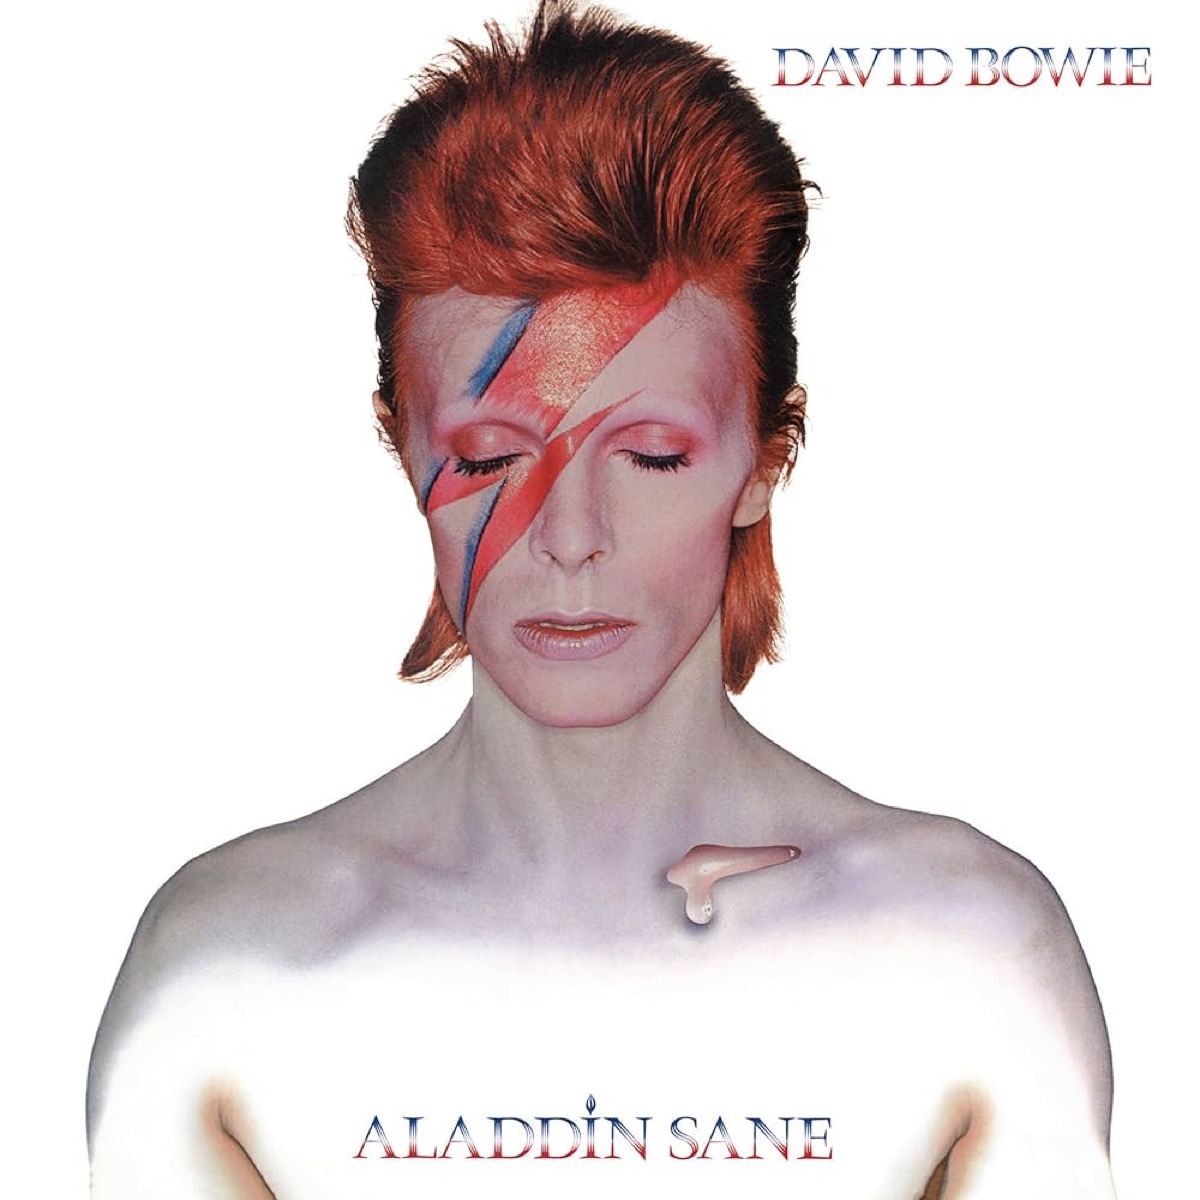 "Aladdin Sane" by David Bowie album cover